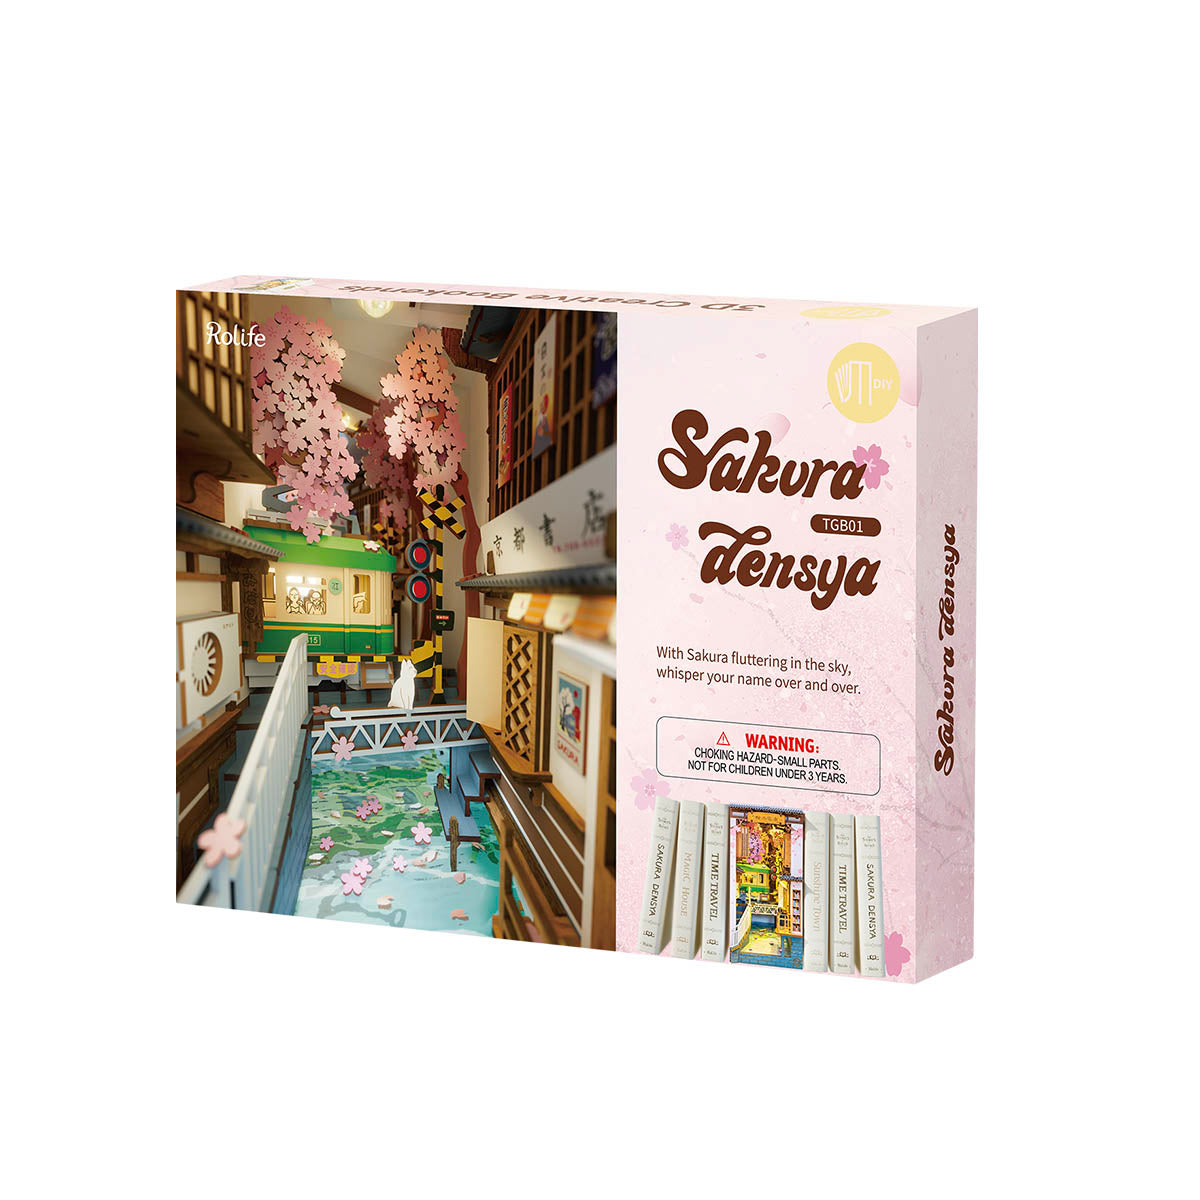 Falling Sakura DIY Book Nook Shelf Insert – Jedidiah Design Store